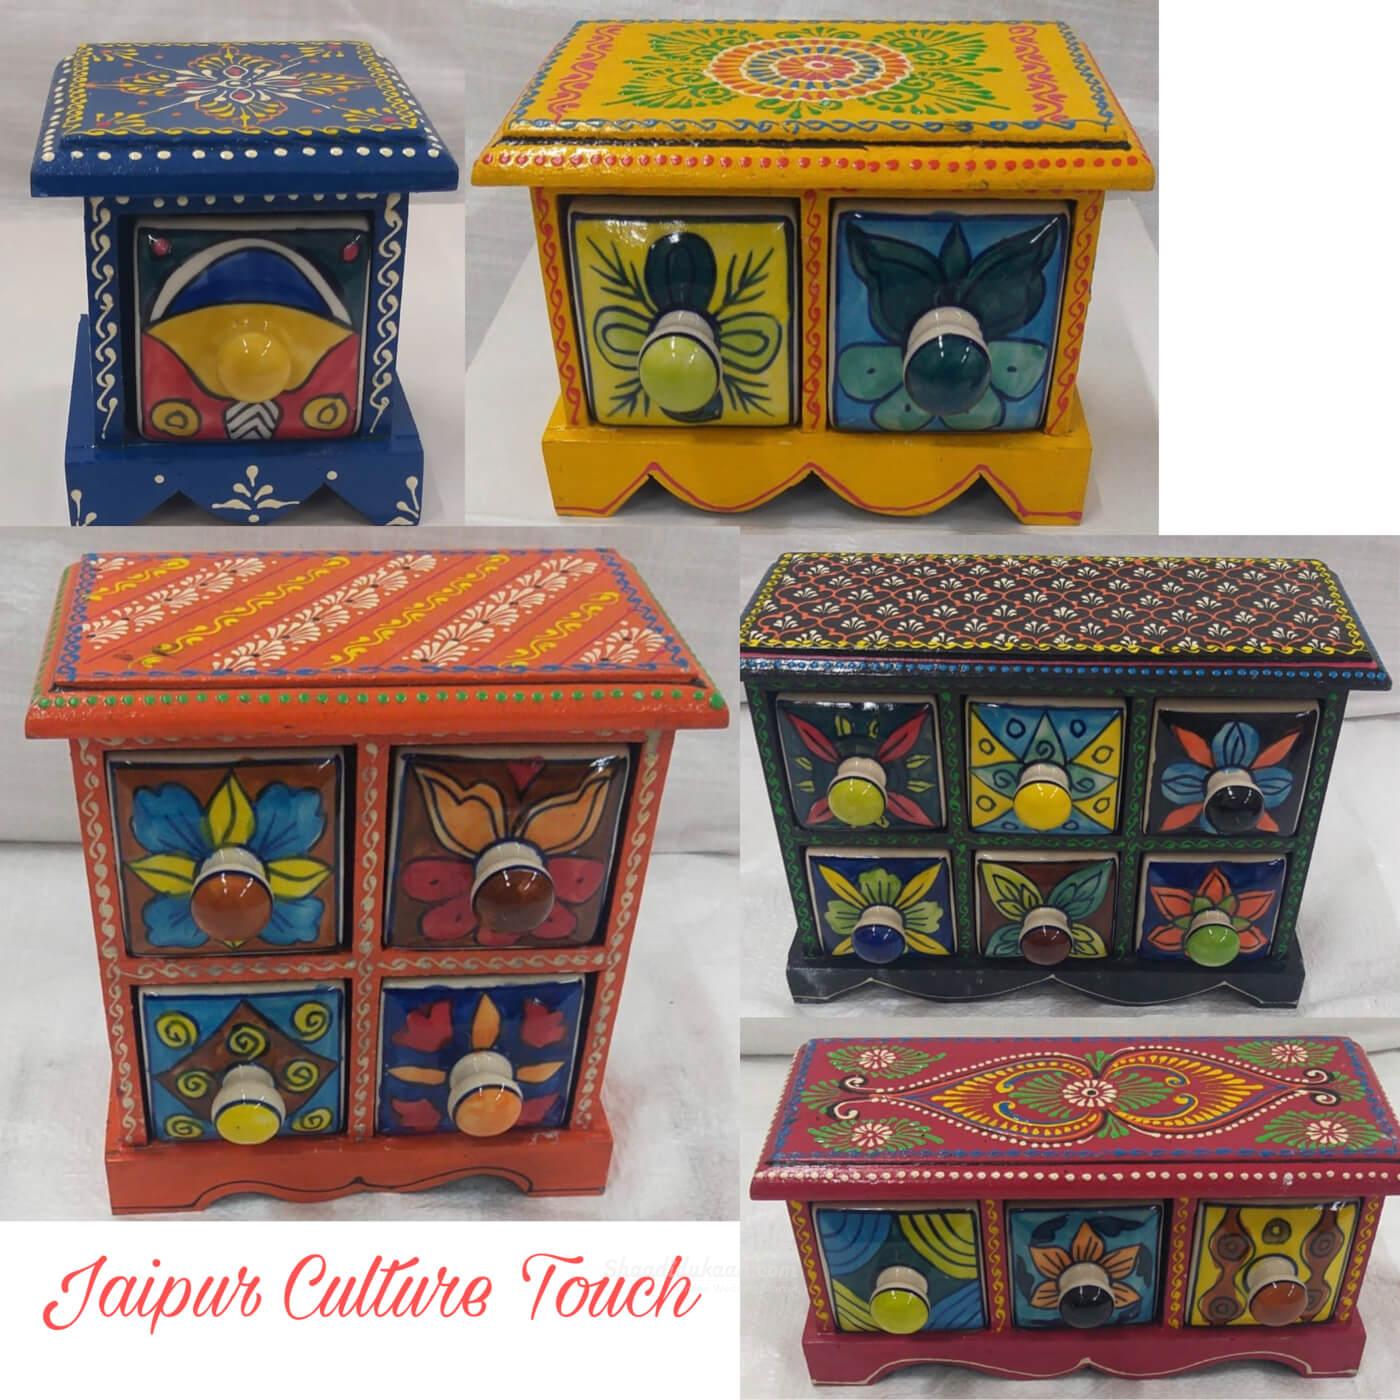 Jaipur Culture Touch